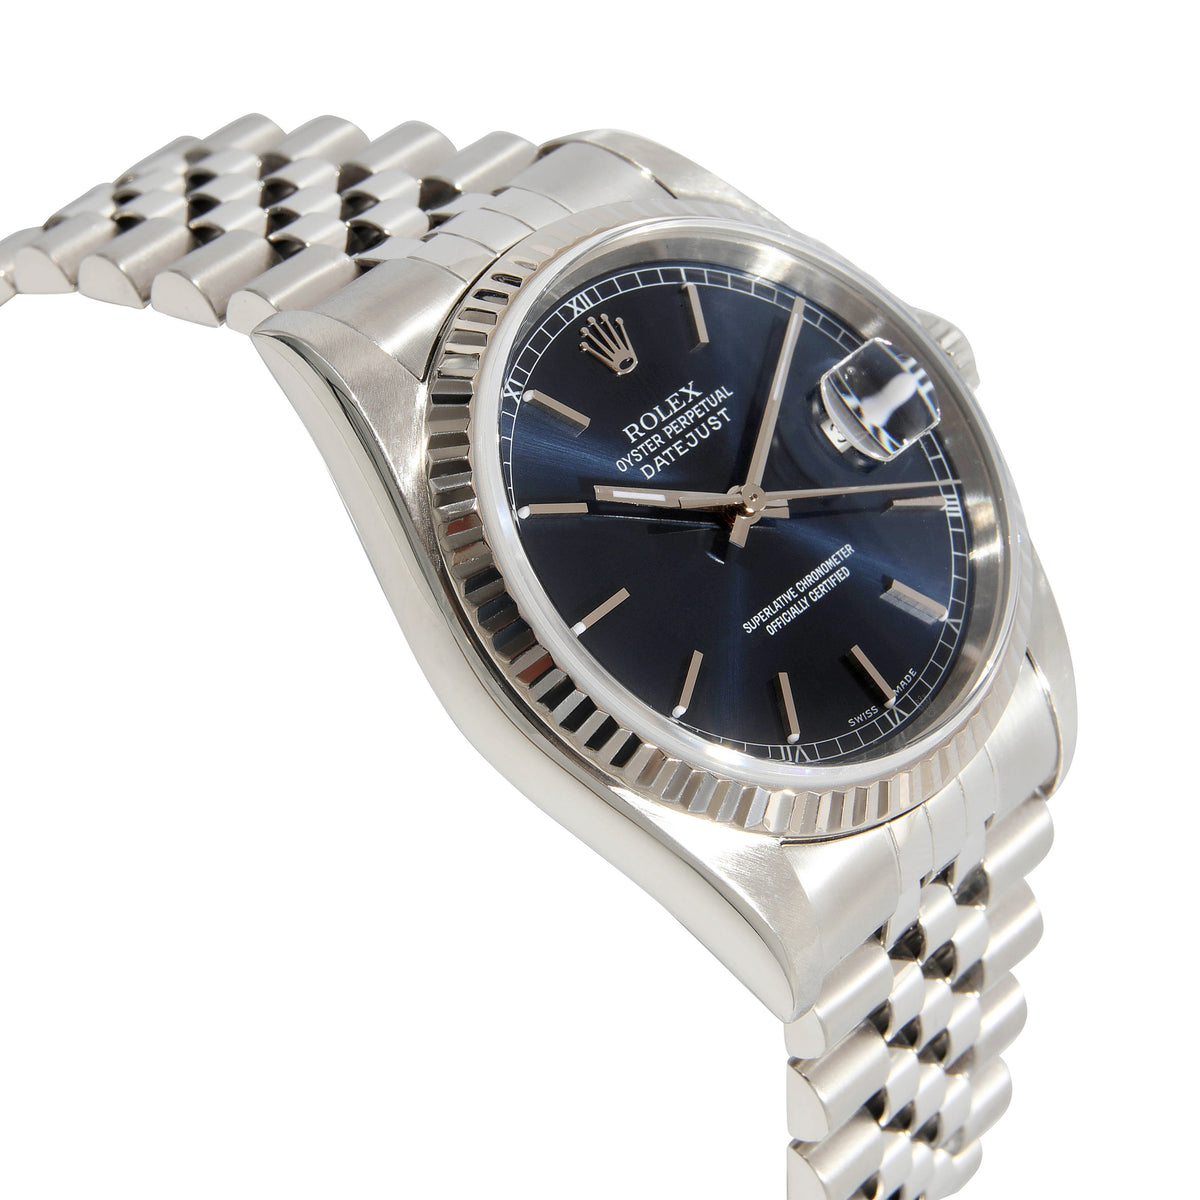 Rolex Datejust 16234 Men's Watch in 18kt Stainless Steel/White Gold